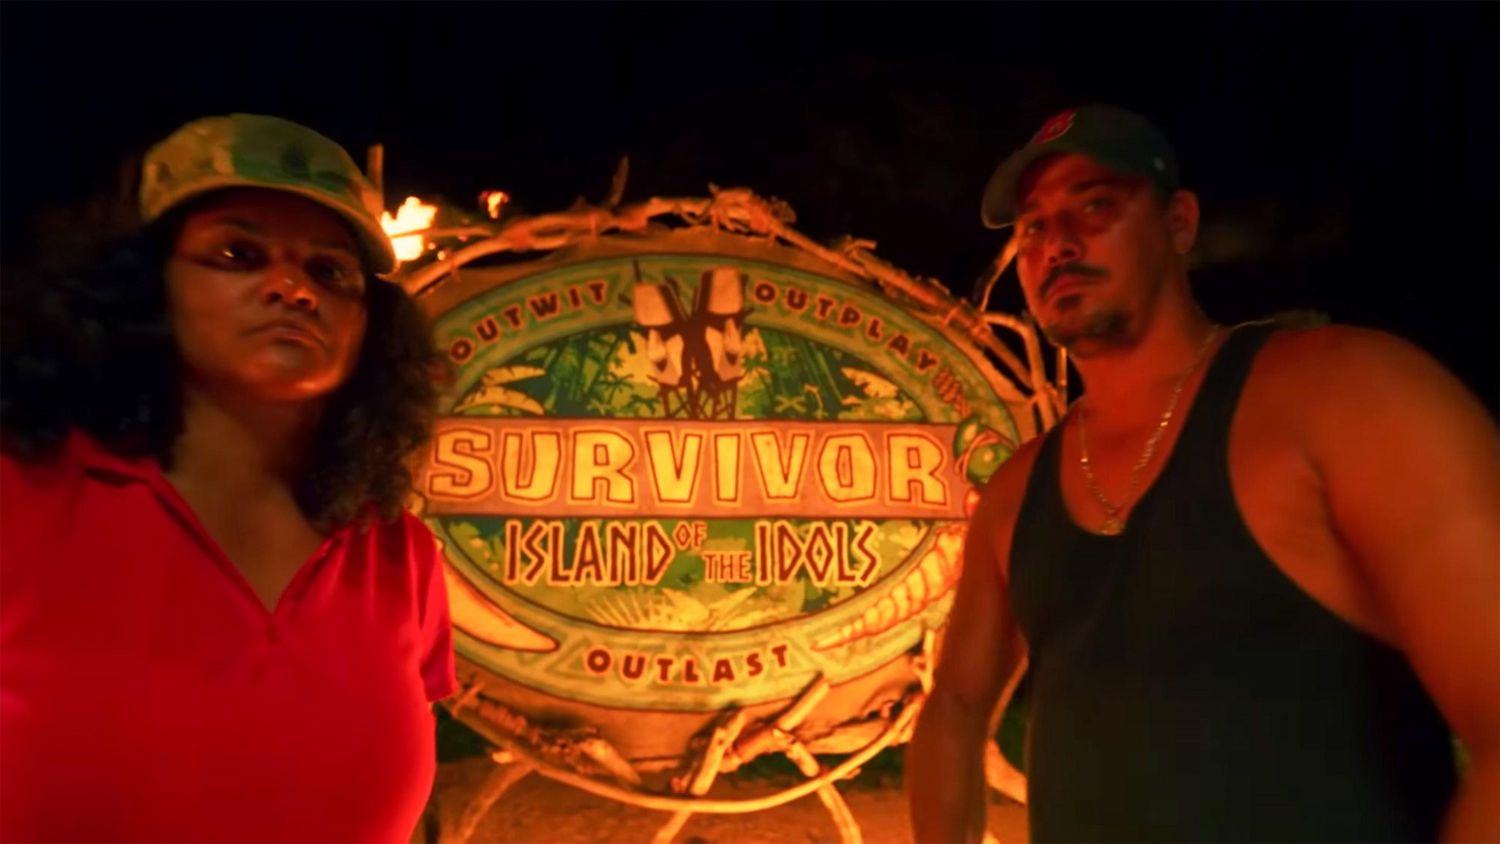 Survivor: Island of the Idols screen grab